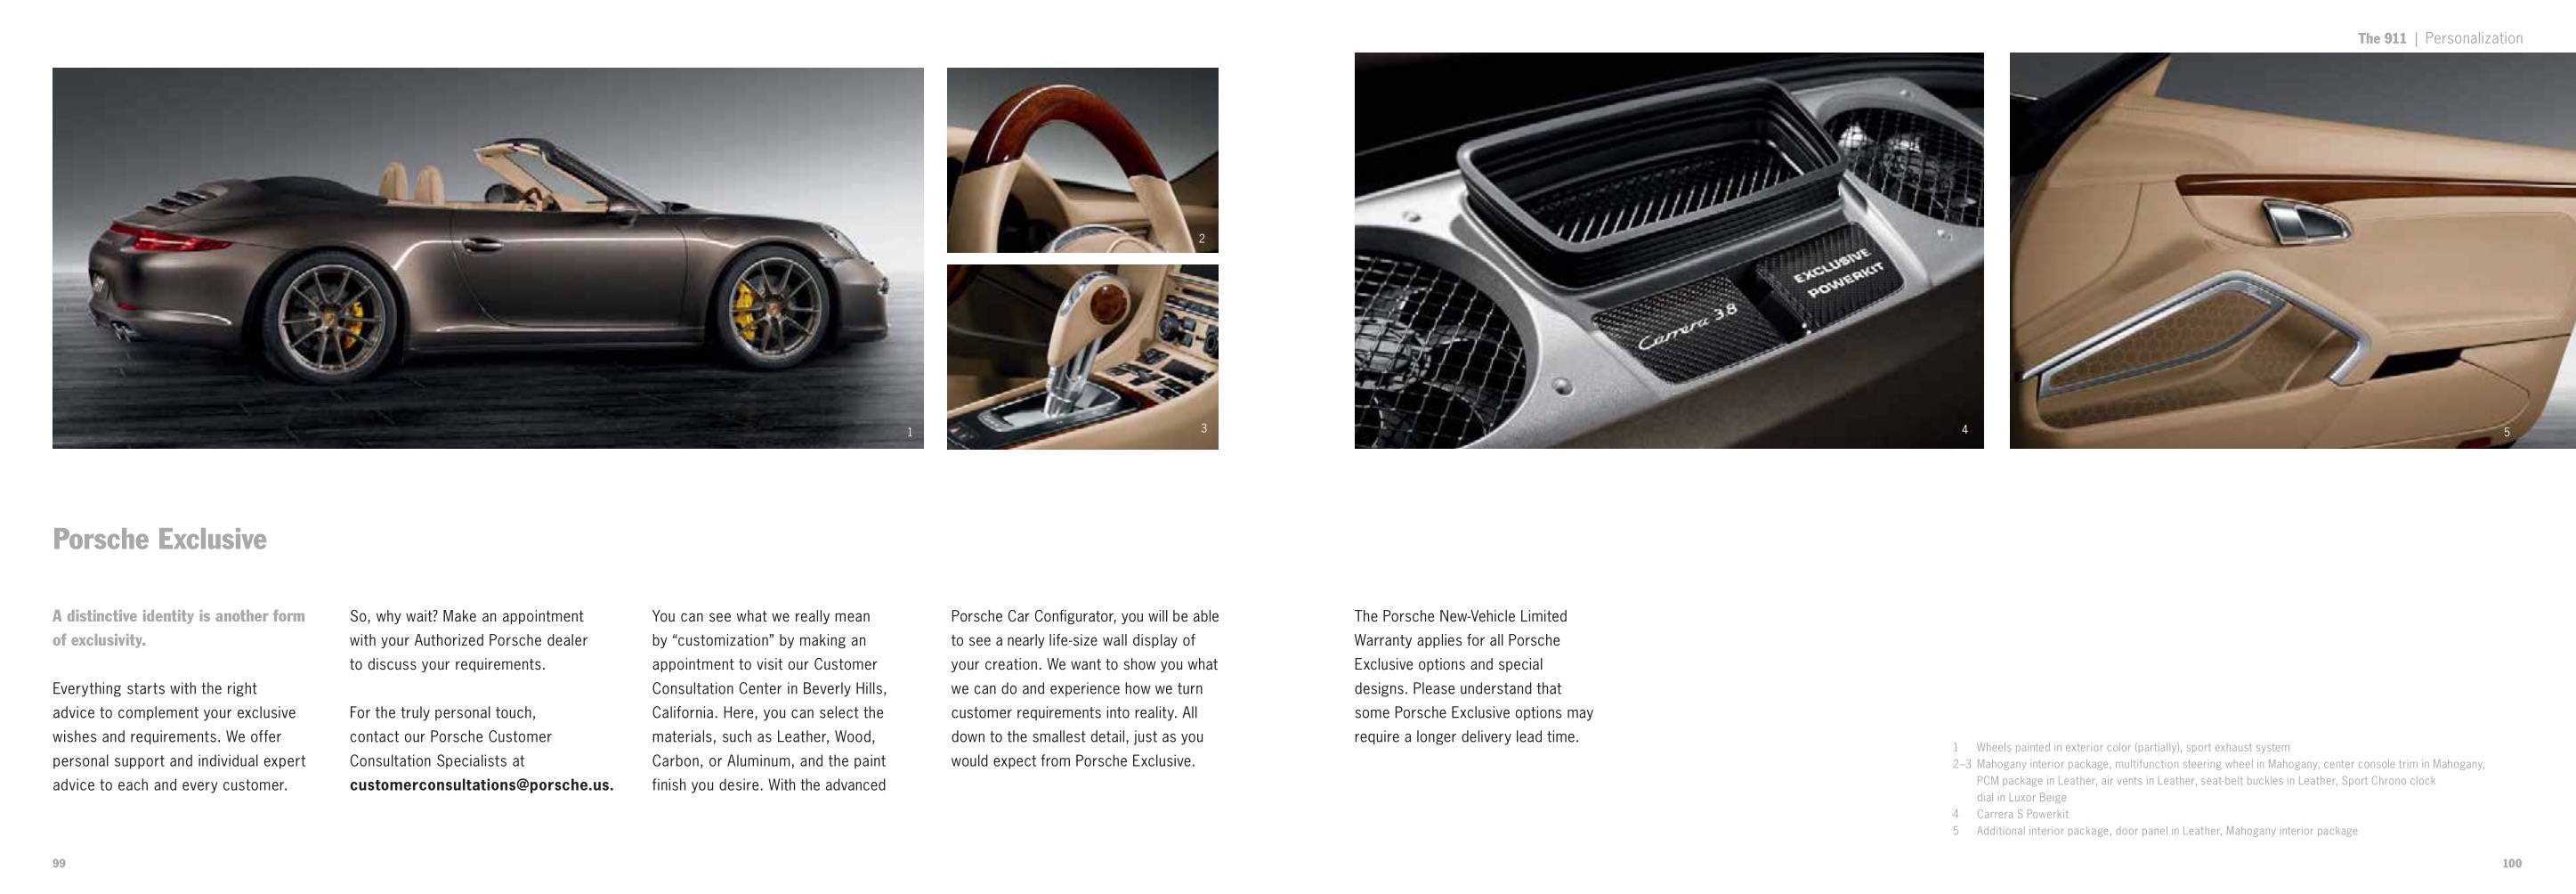 2013 Porsche 911 Brochure Page 15